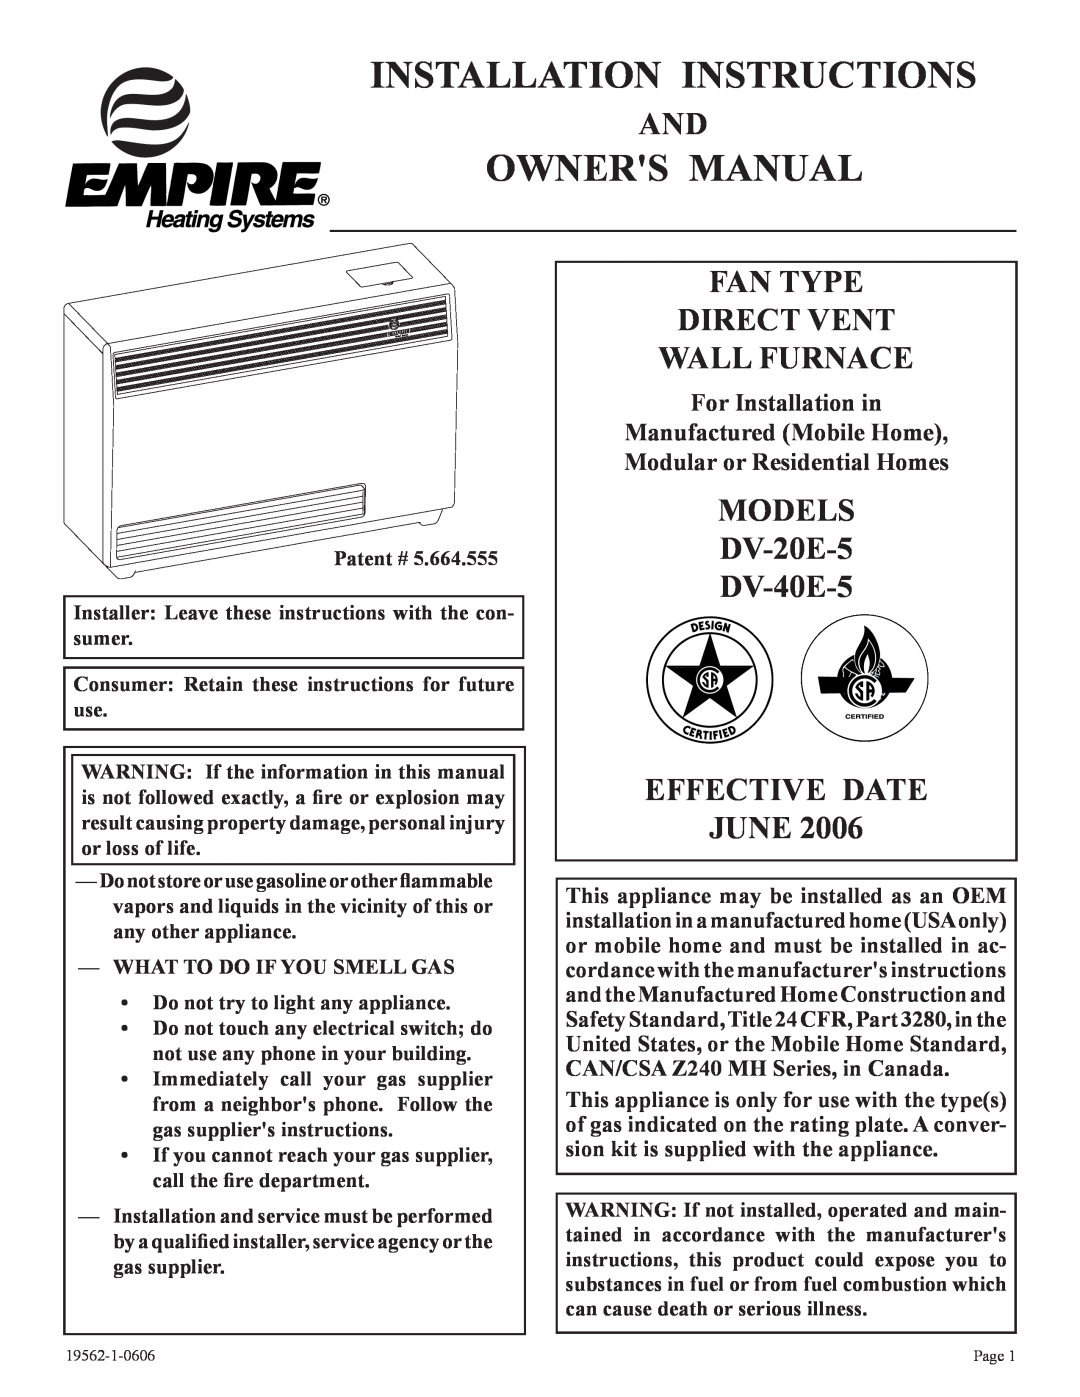 Langley/Empire DV-40E-5 installation instructions Installation Instructions, Fan Type, Direct Vent, Models, Effective Date 